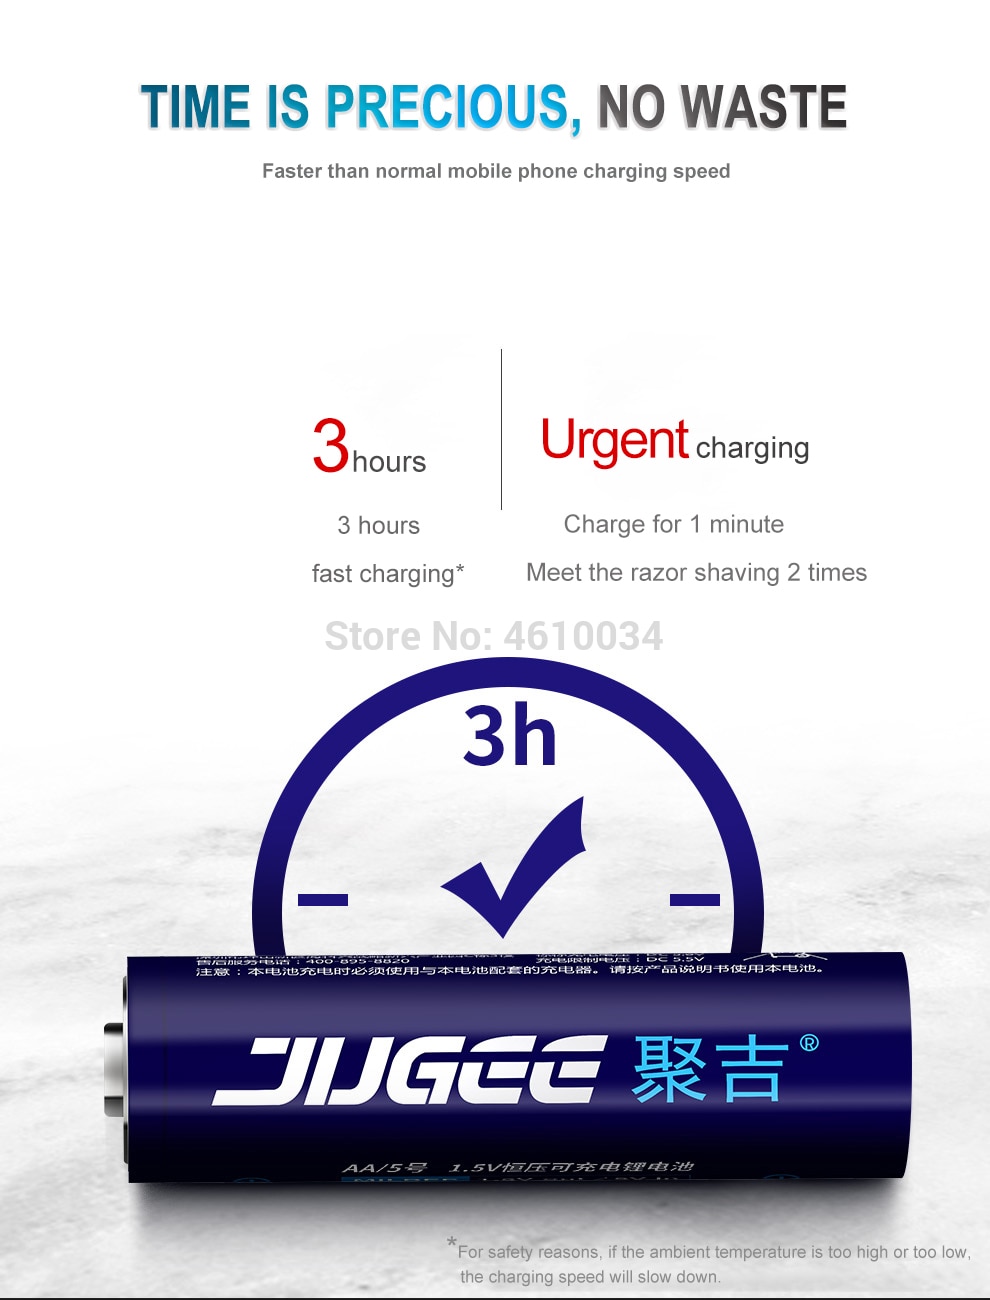 Jugee Aa 1.5V 3000mWh Lithium Li-Ion Oplaadbare Batterij + 4 Kanaals Lithium Polymeer Li-Ion Batterij Batterijen Oplader